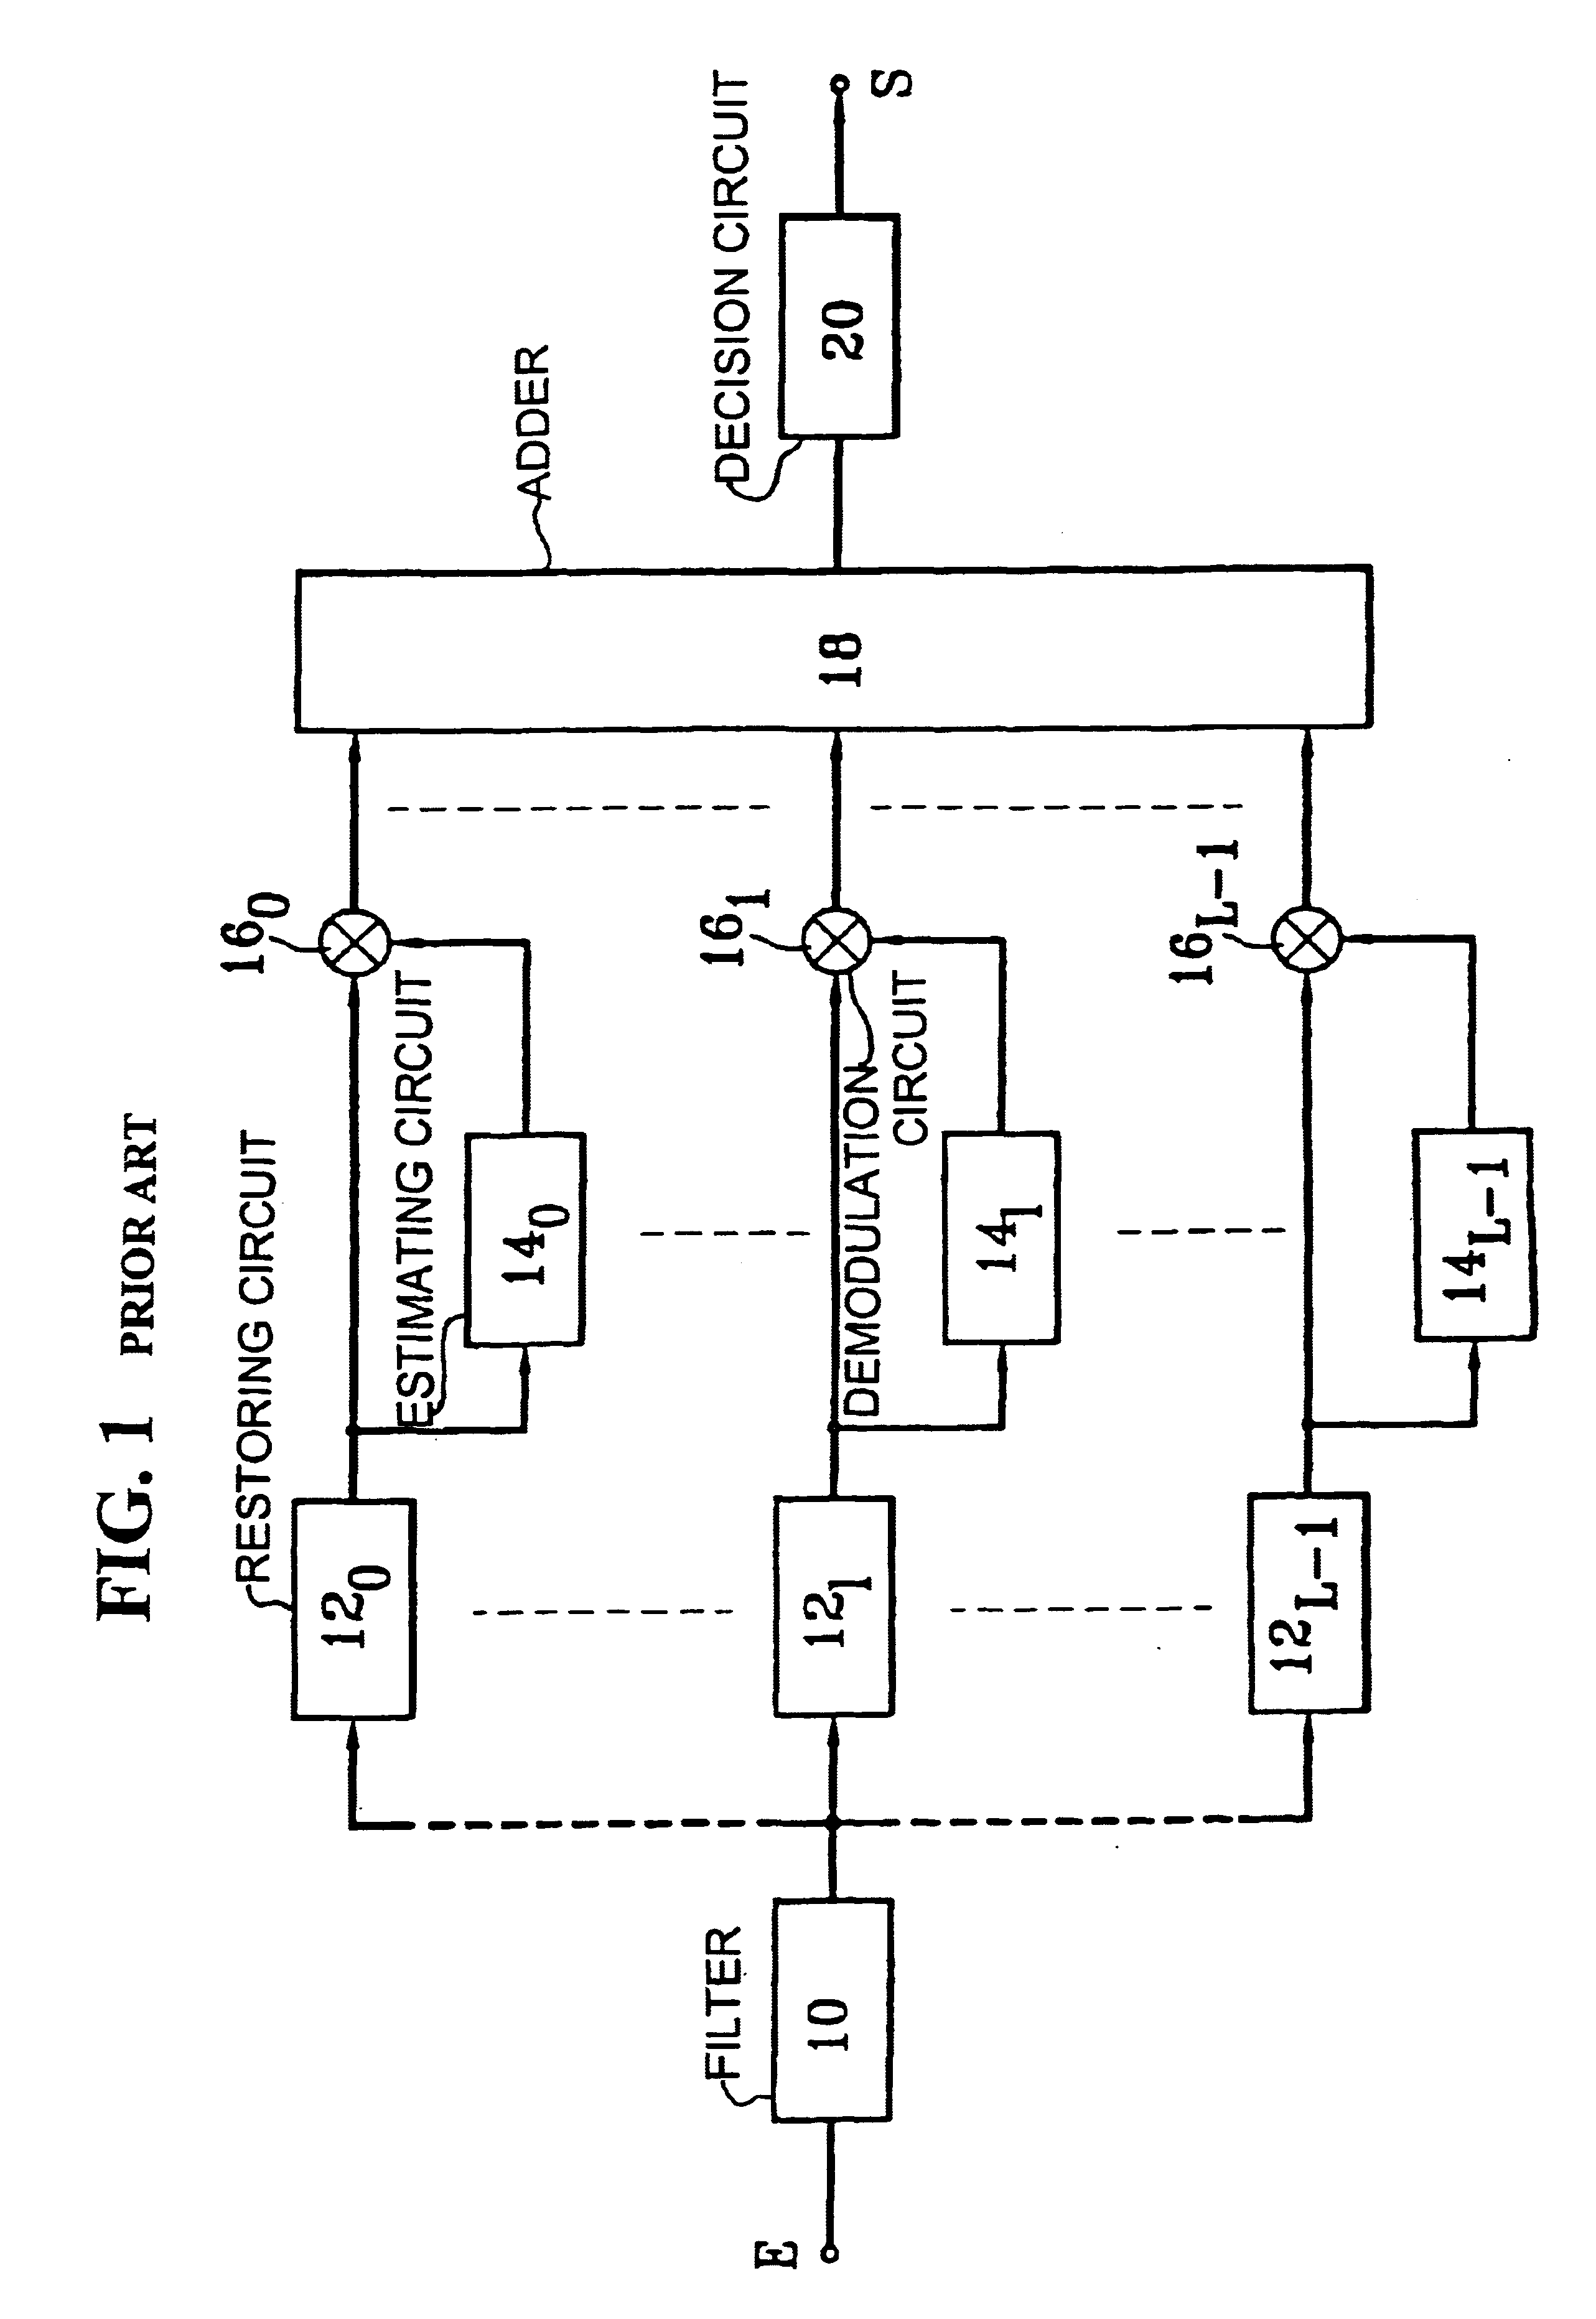 Iterative rake receiver and corresponding reception process